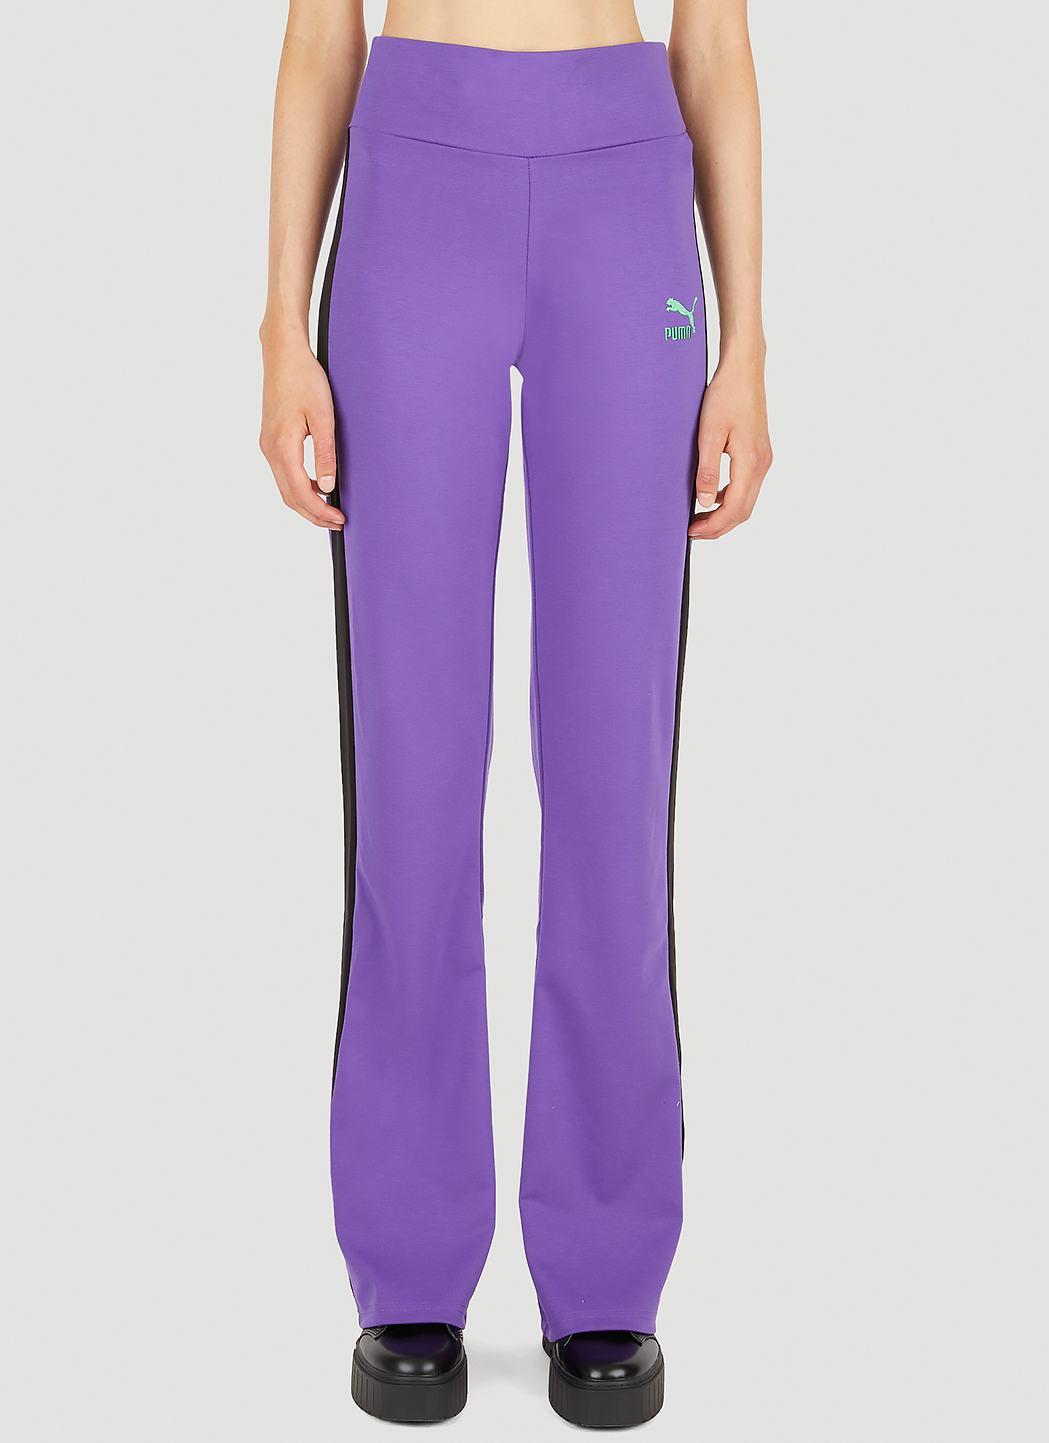 Puma x Dua Lipa Women's T7 Track Pants in Purple